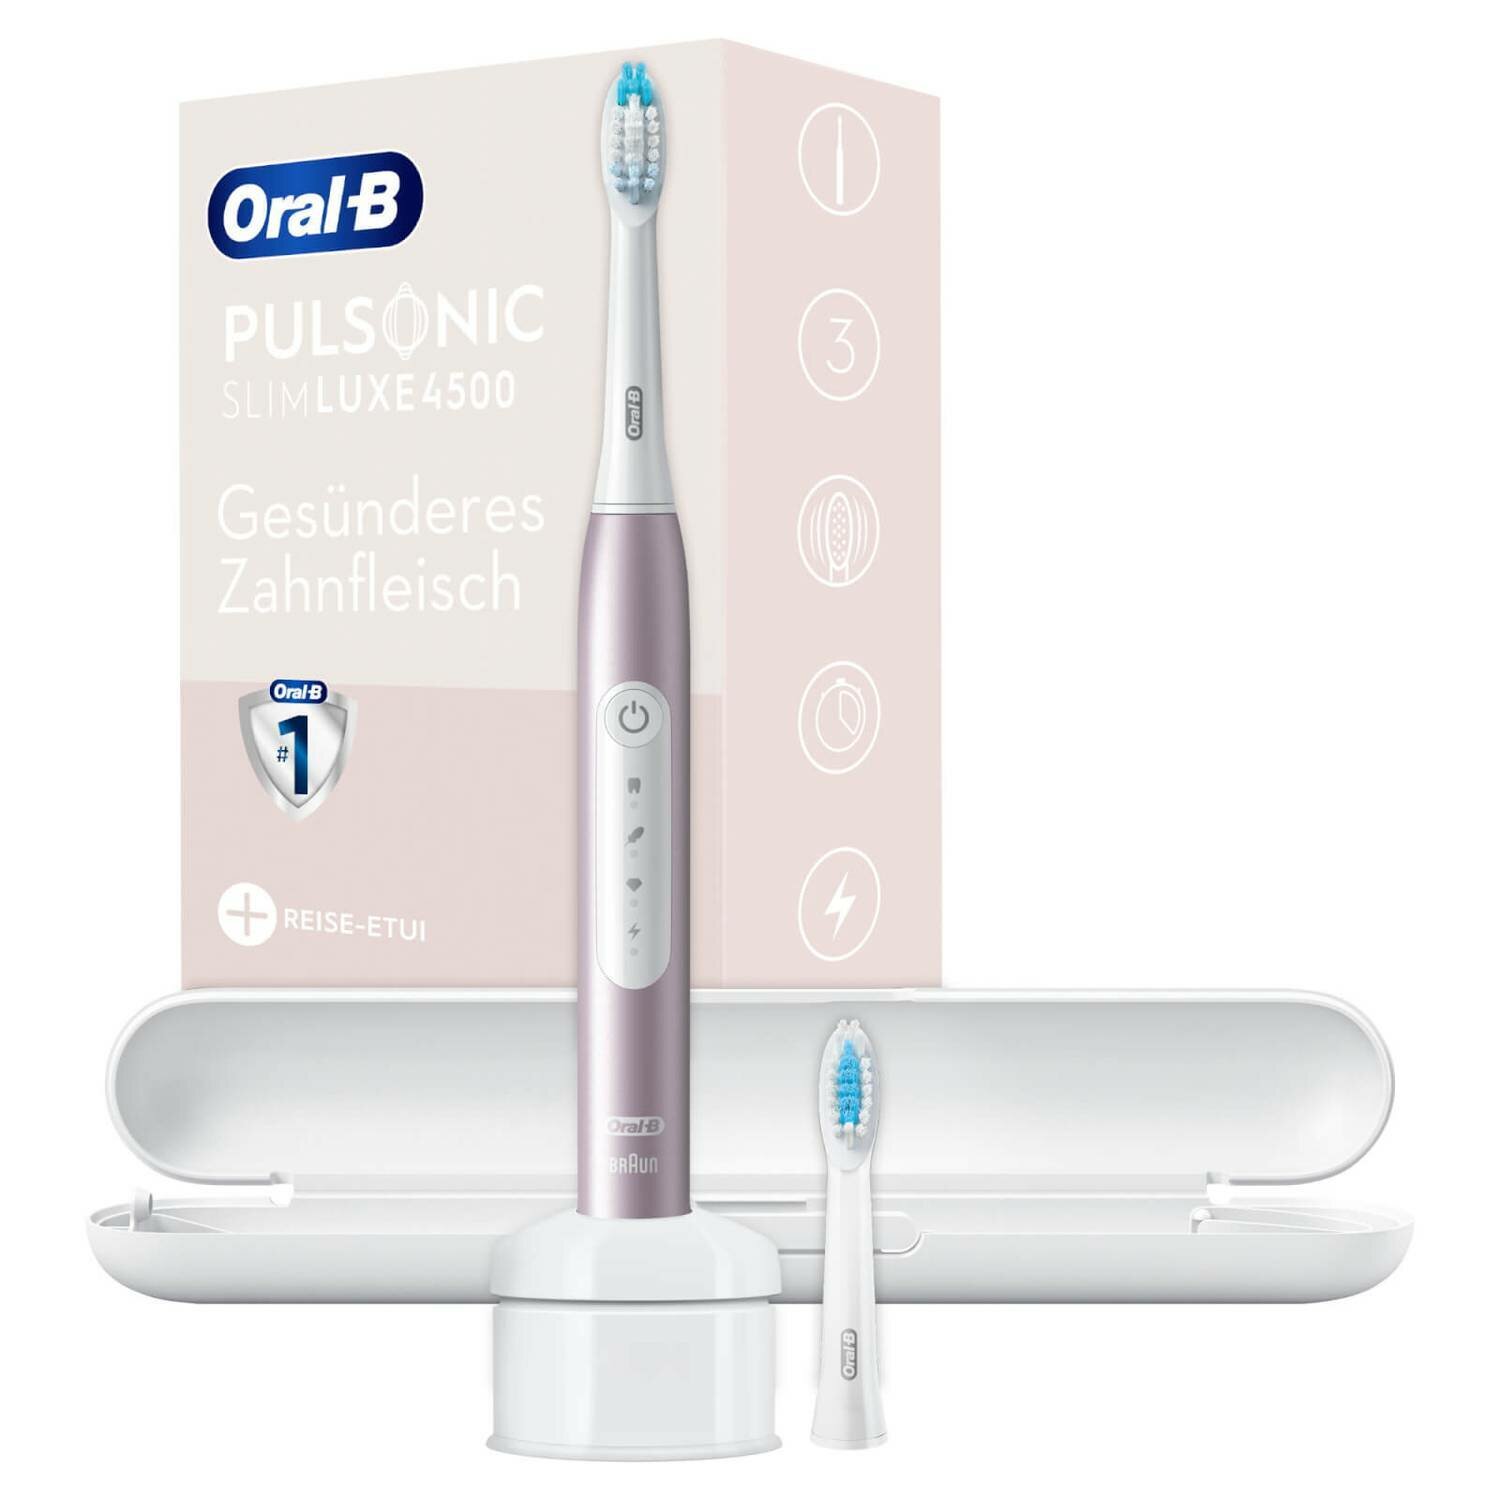 Электрическая зубная щетка Oral-B Pulsonic Slim Luxe 4500